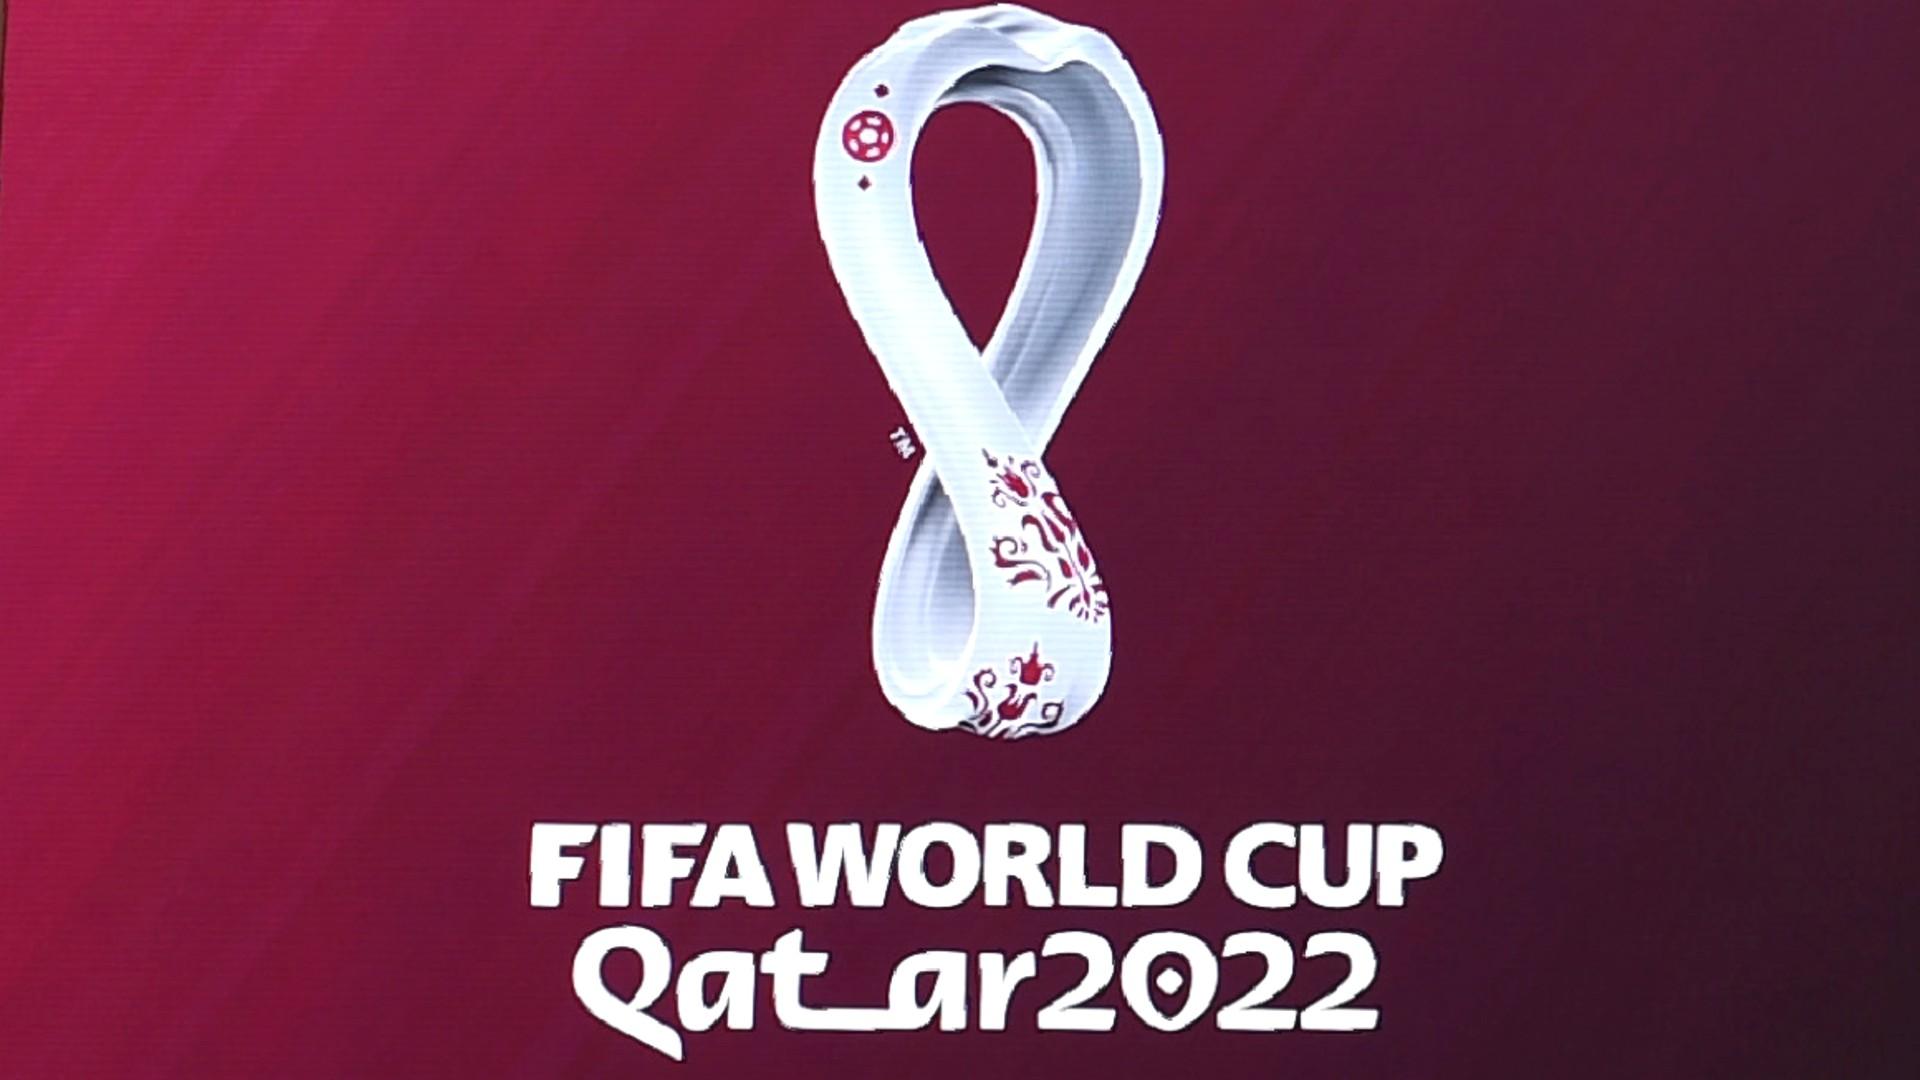 Fifa World Cup Qatar 2022 Photos2